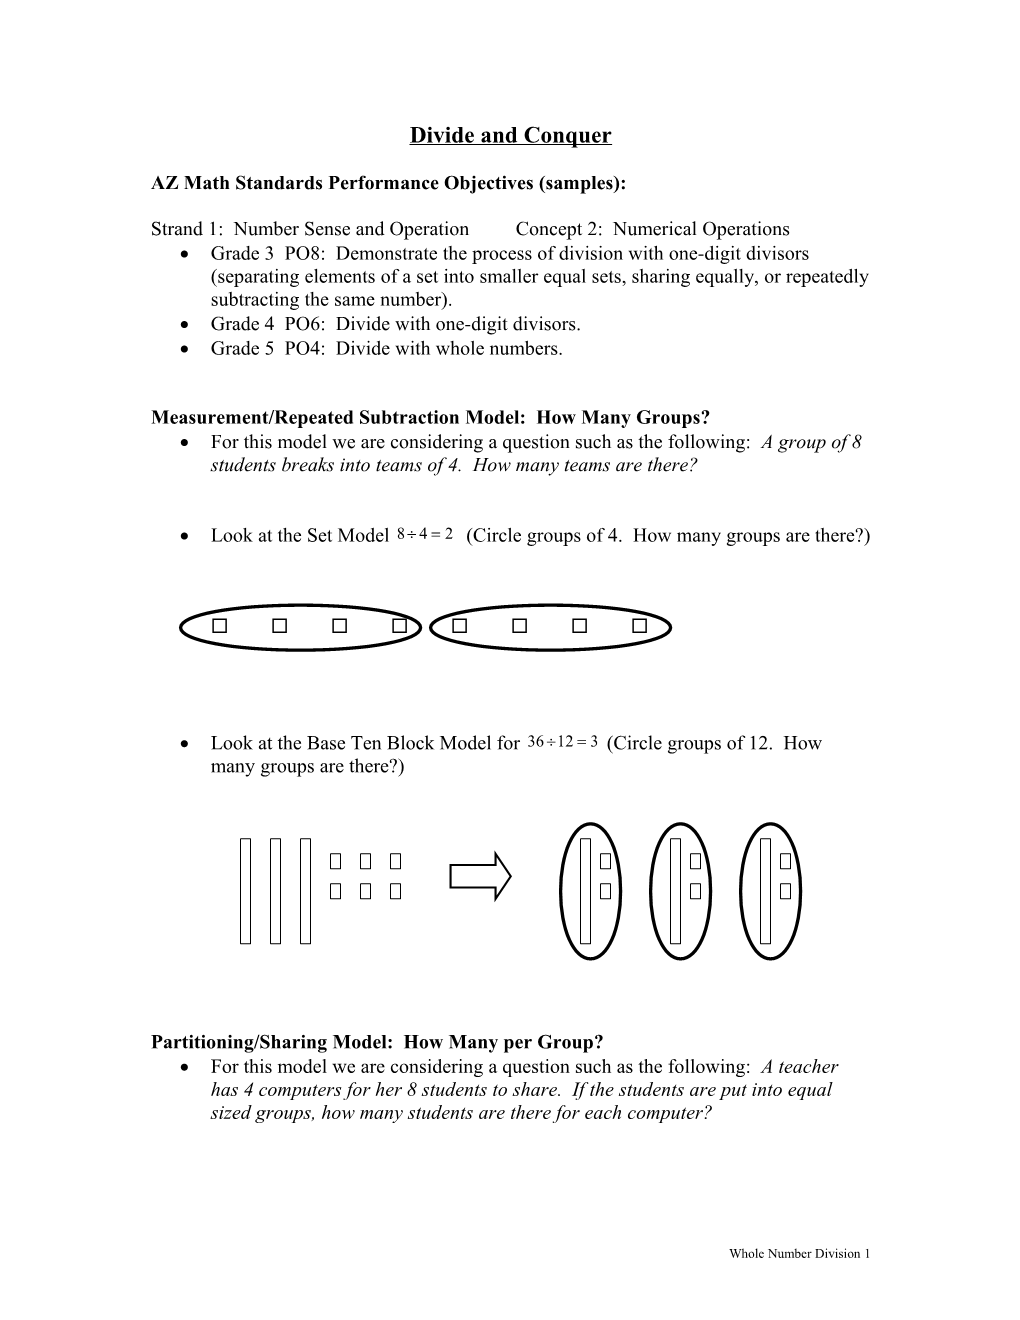 AZ Math Standards Performance Objectives (Samples)